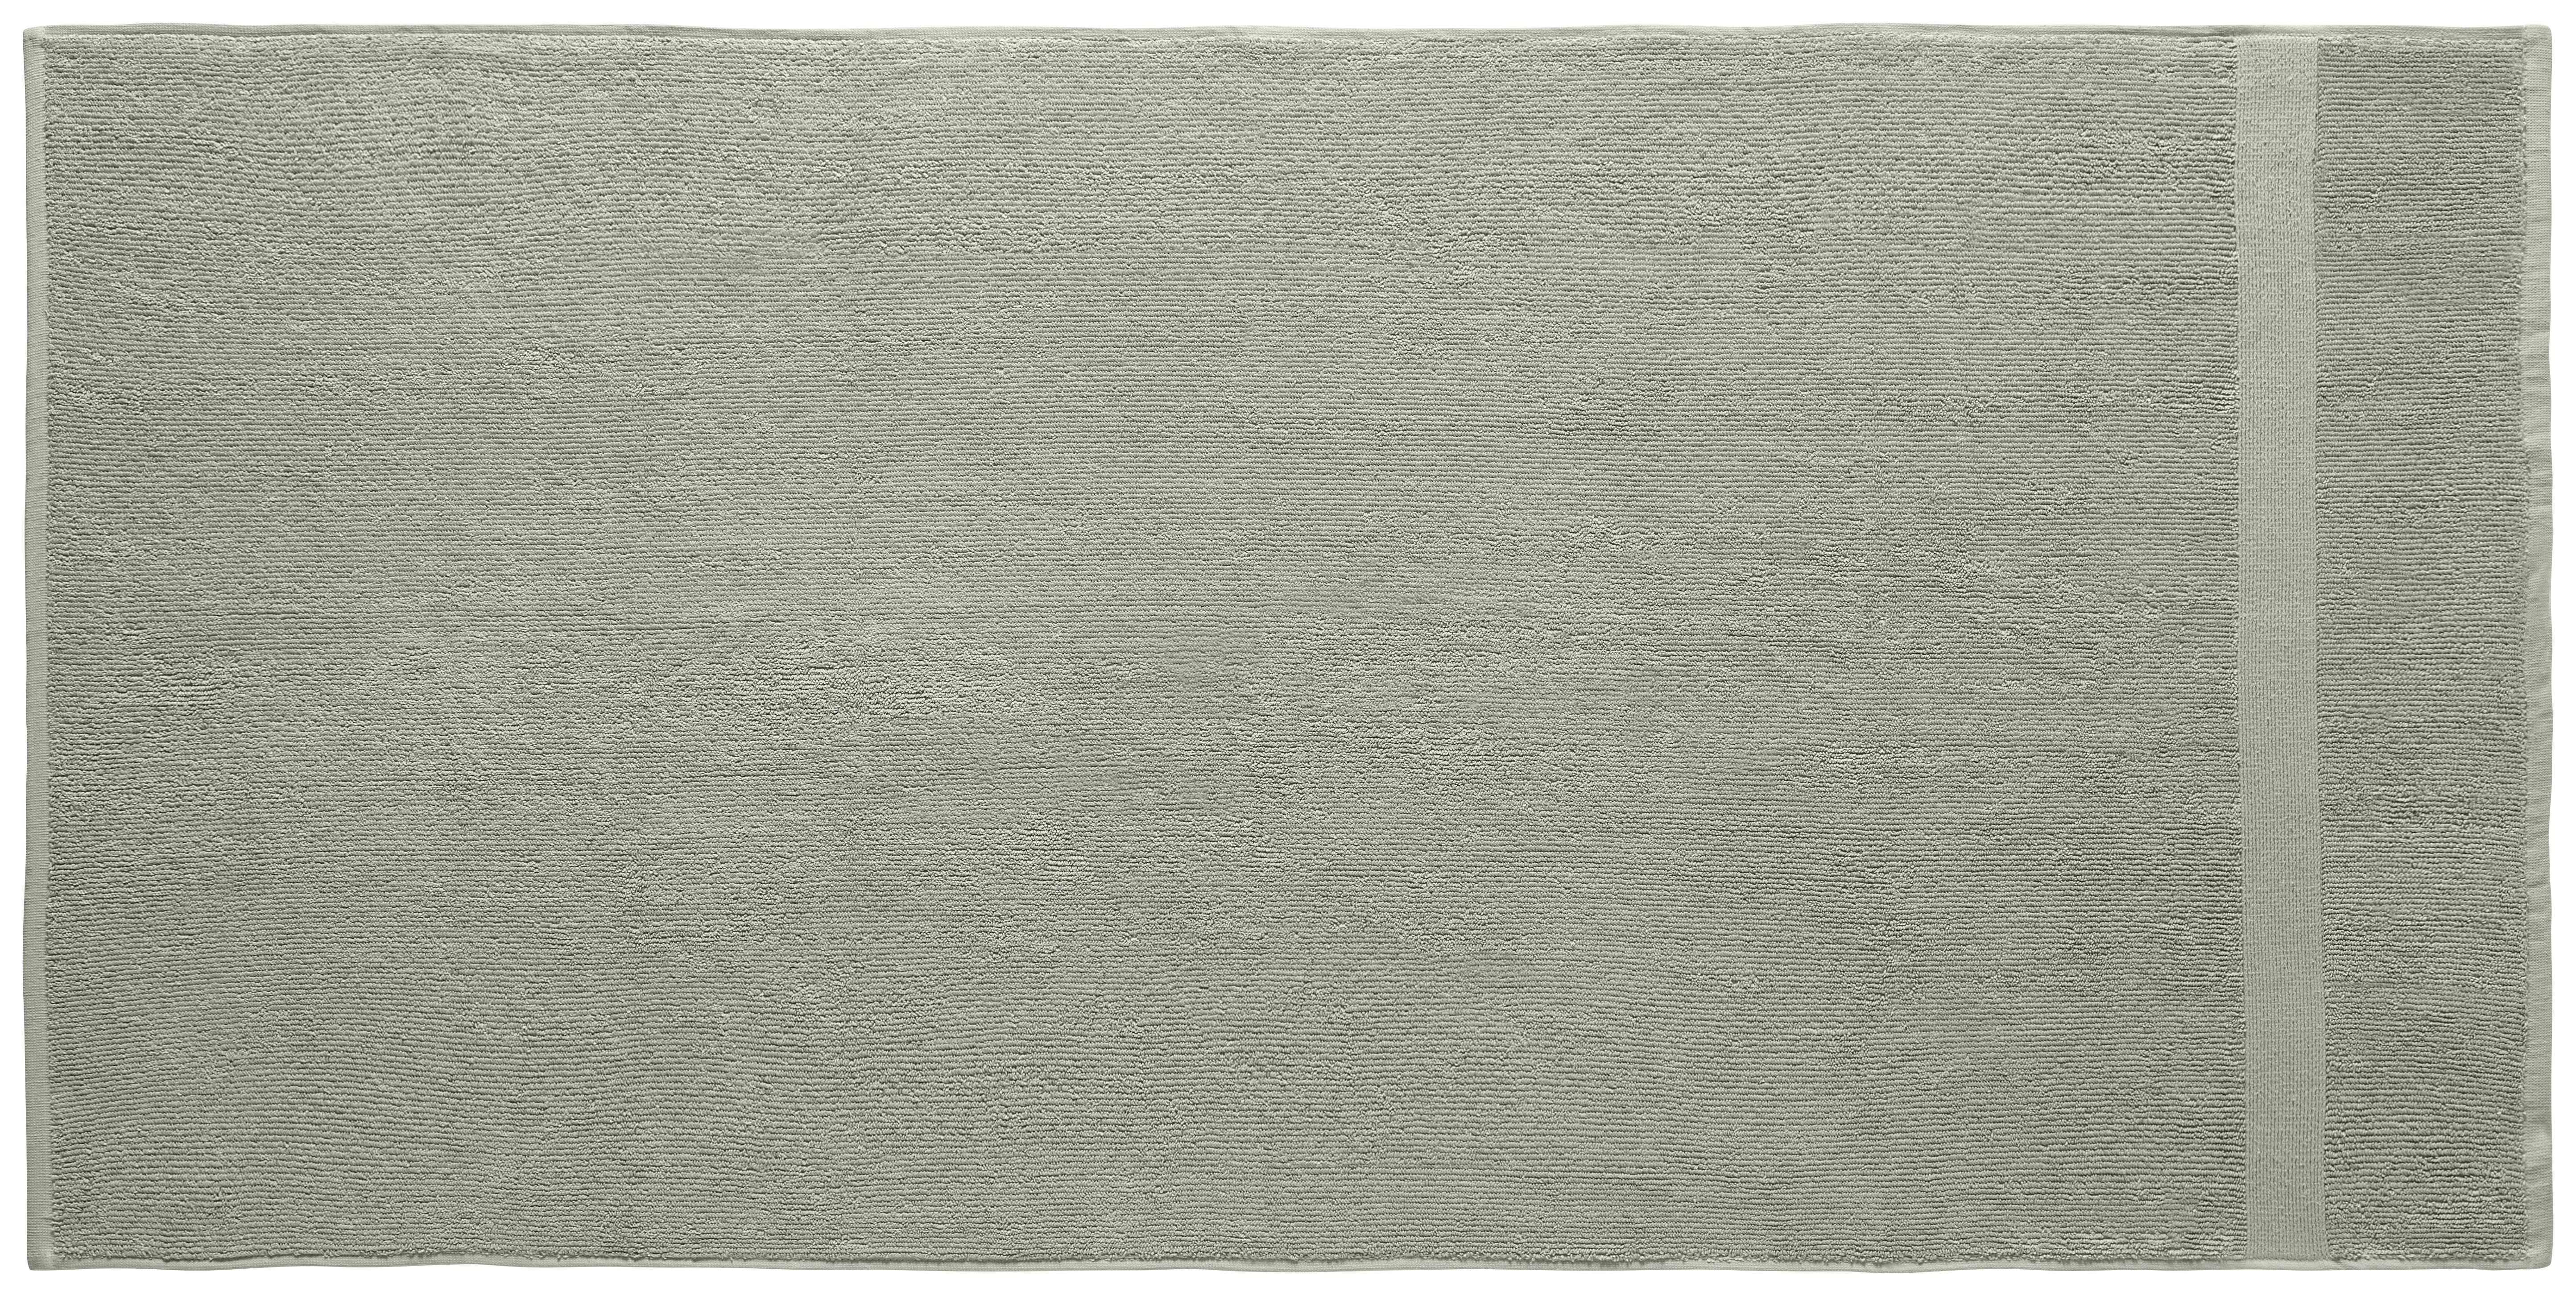 Duschtuch Bio Hanna in Olivgrün ca. 70x140cm - Olivgrün, Natur, Textil (70/140cm) - ecoTree